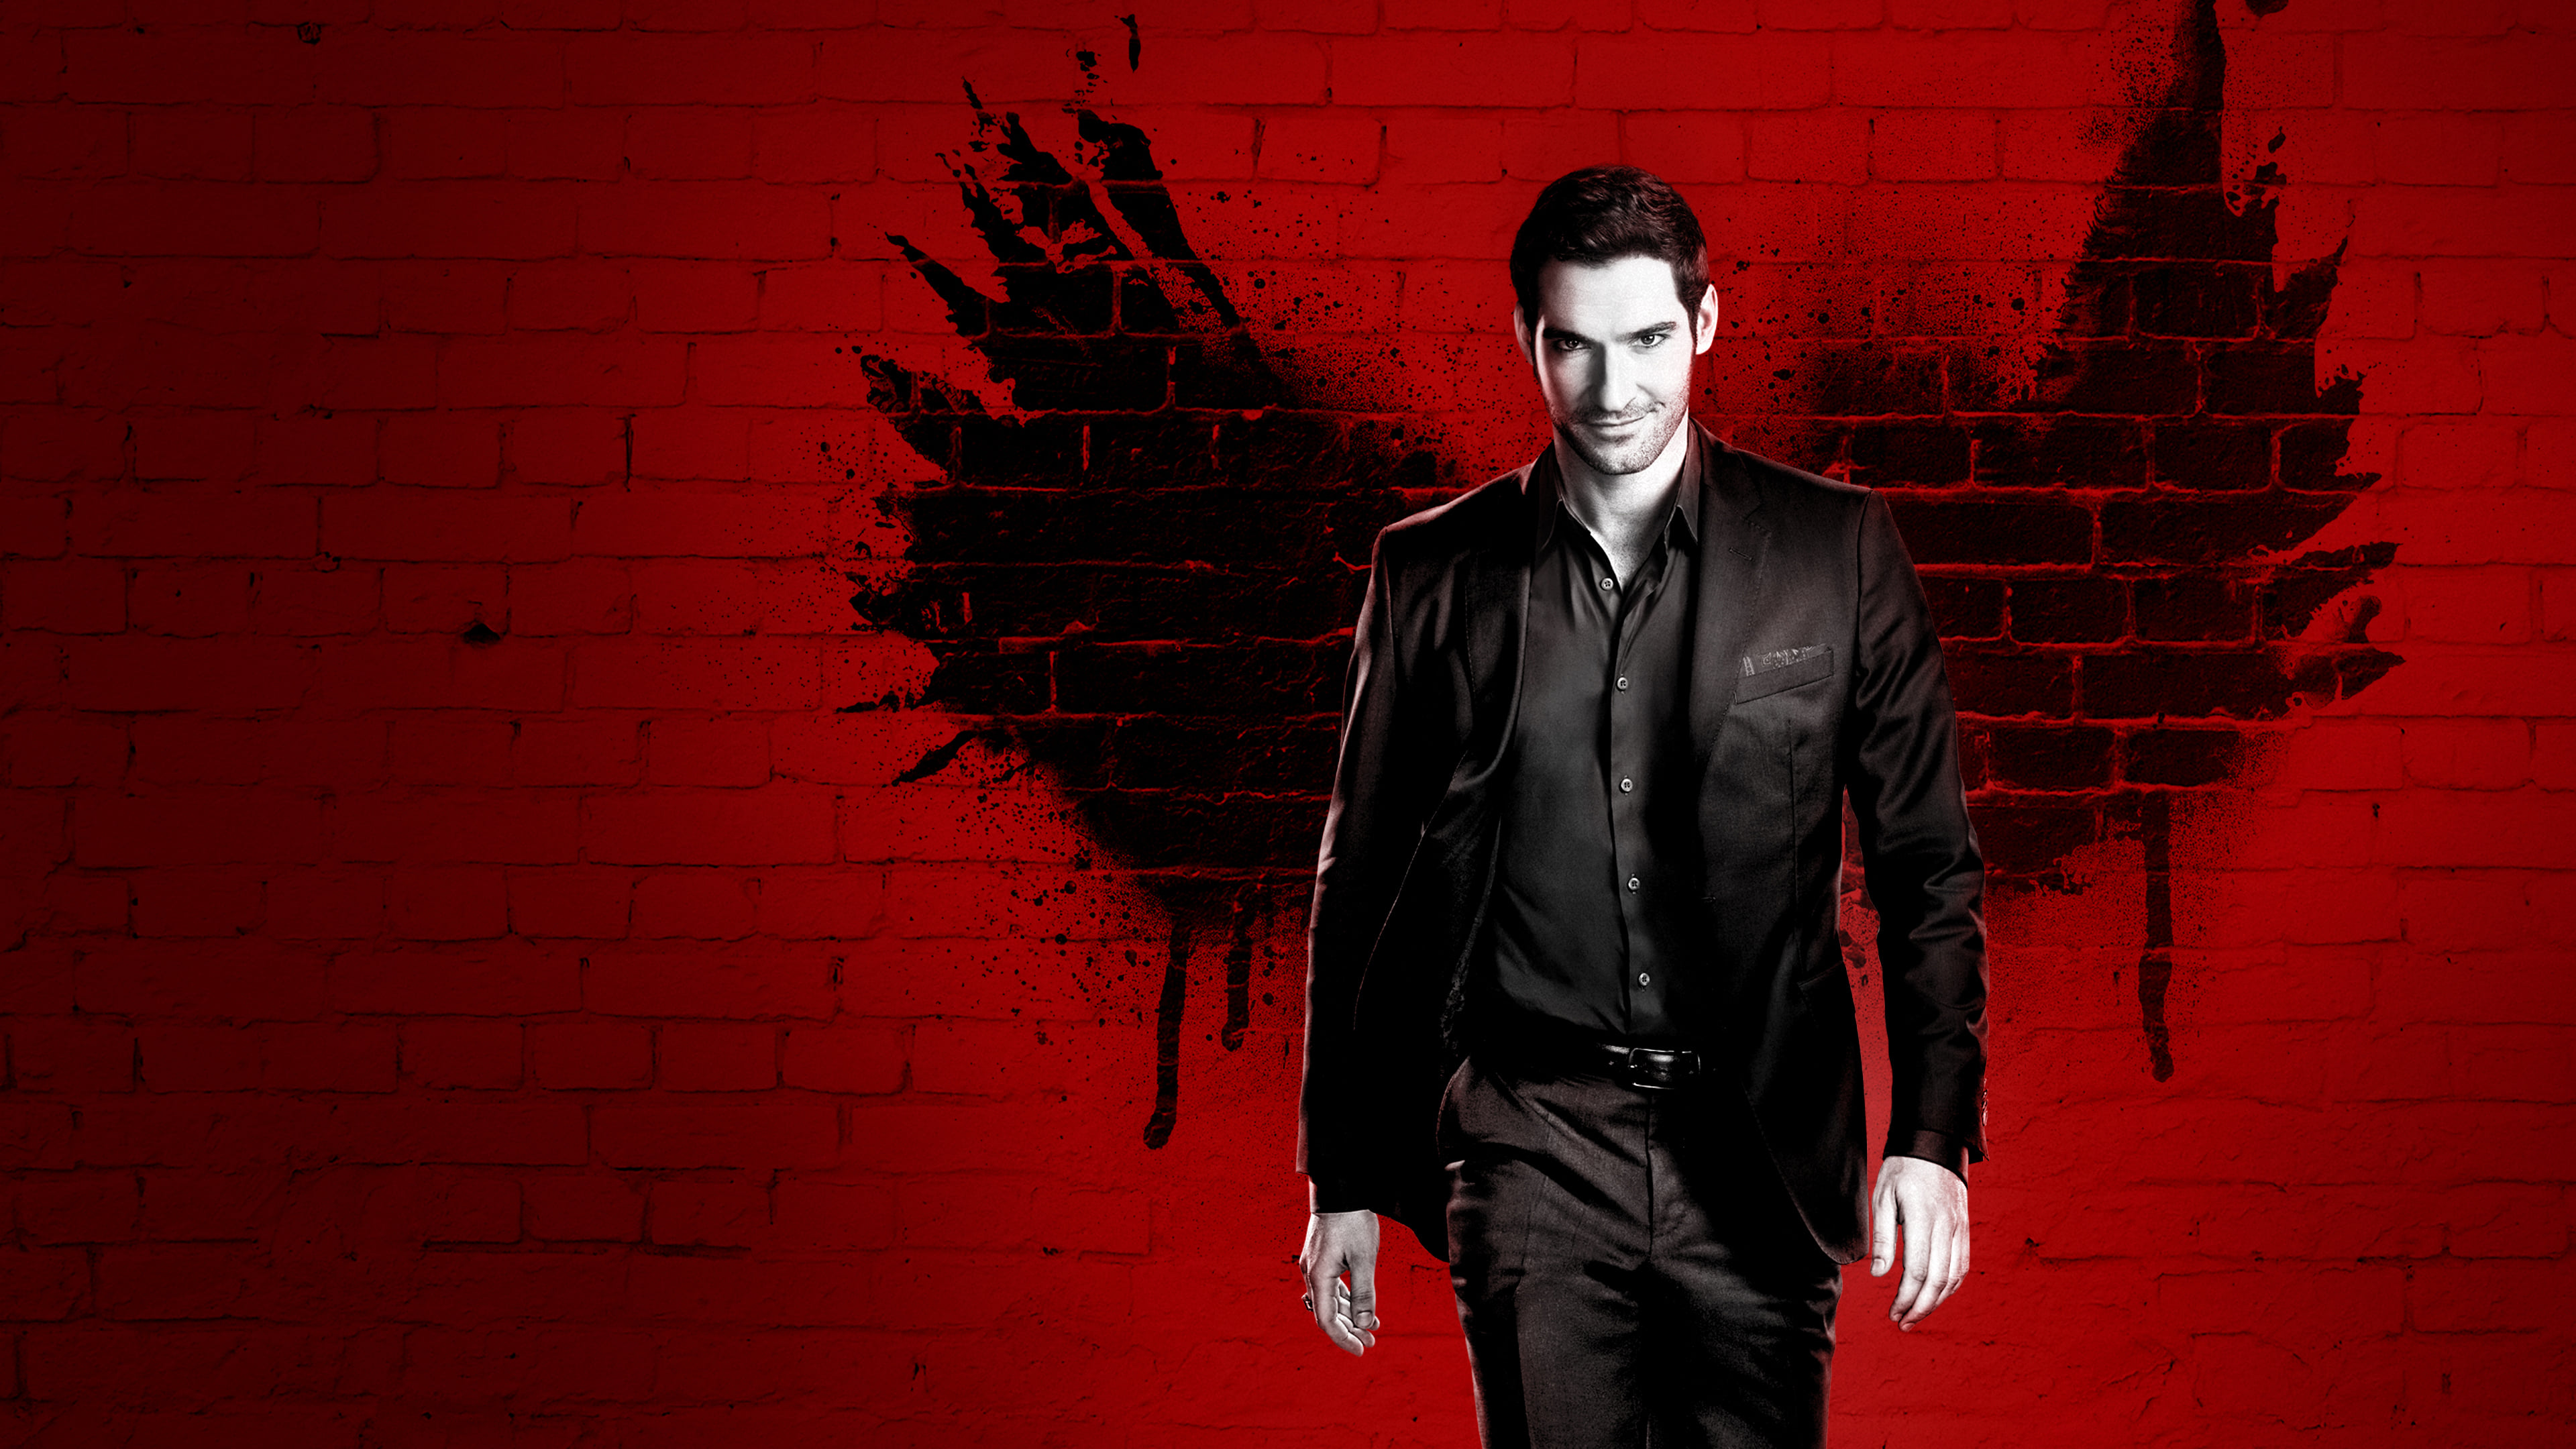 TV Show Lucifer HD Wallpaper | Background Image